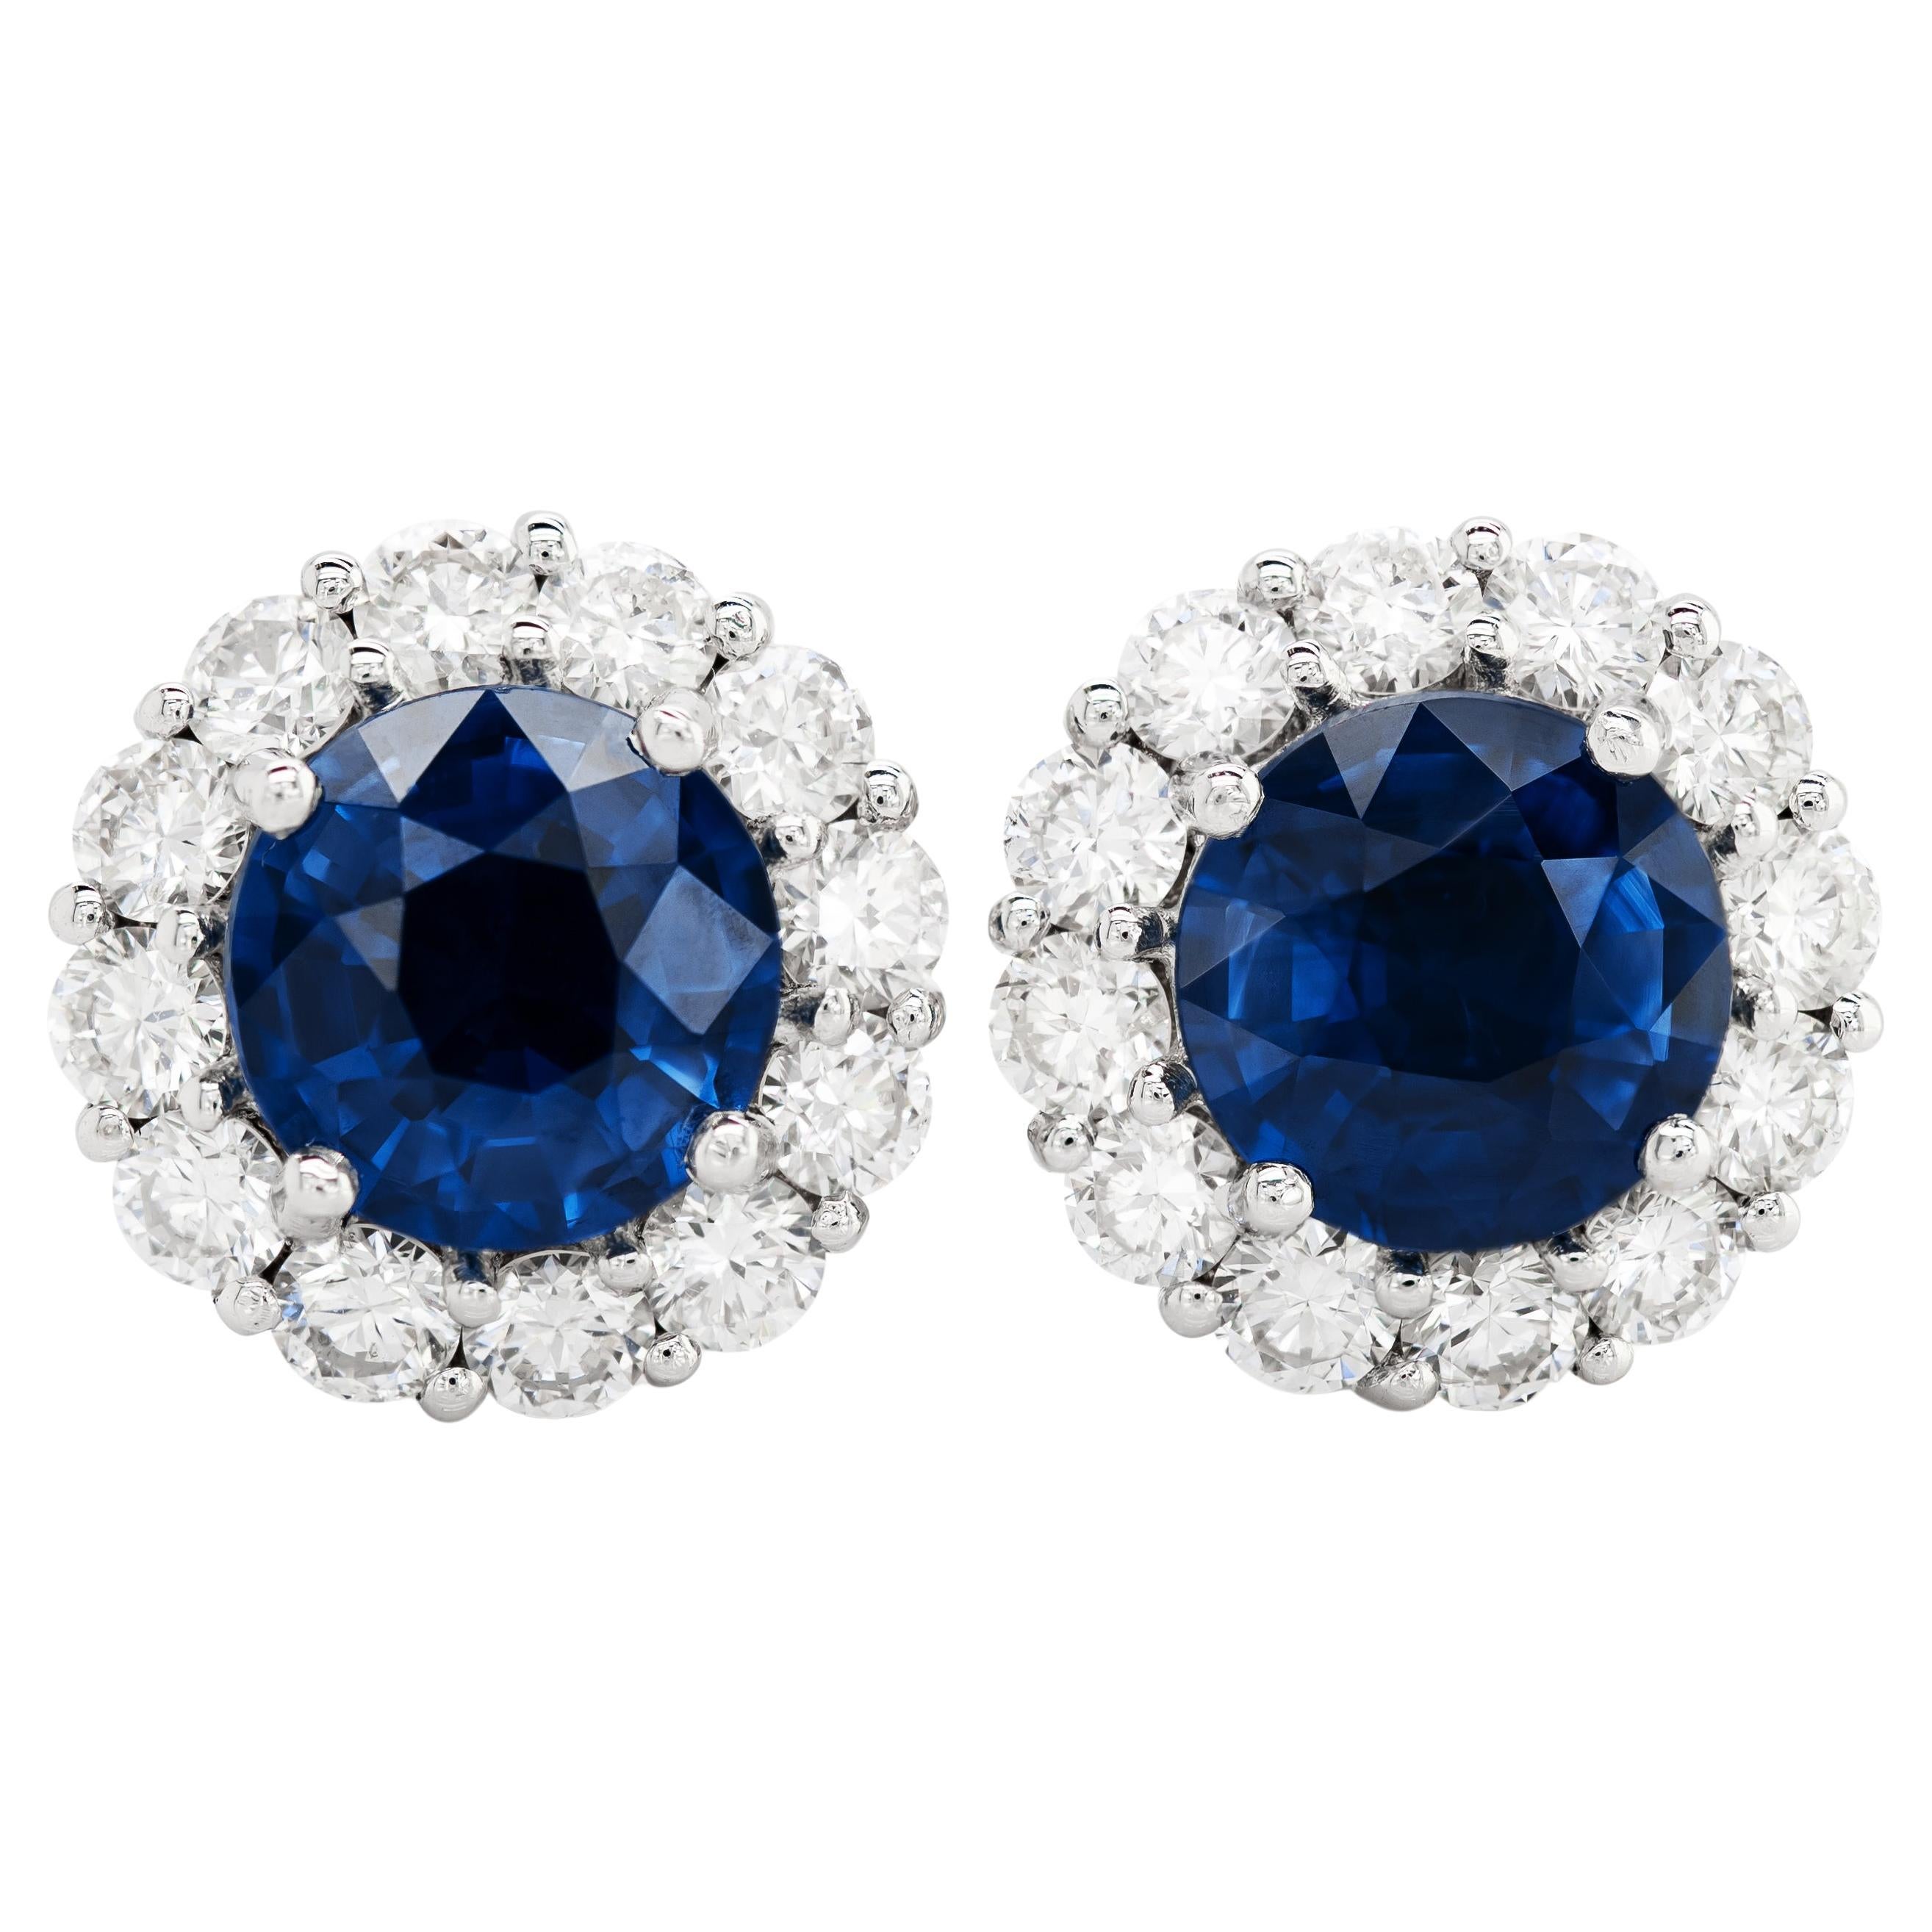 Saphirs bleus naturels 2.60 carats  Boucles d'oreilles en or blanc 18 carats serties de diamants